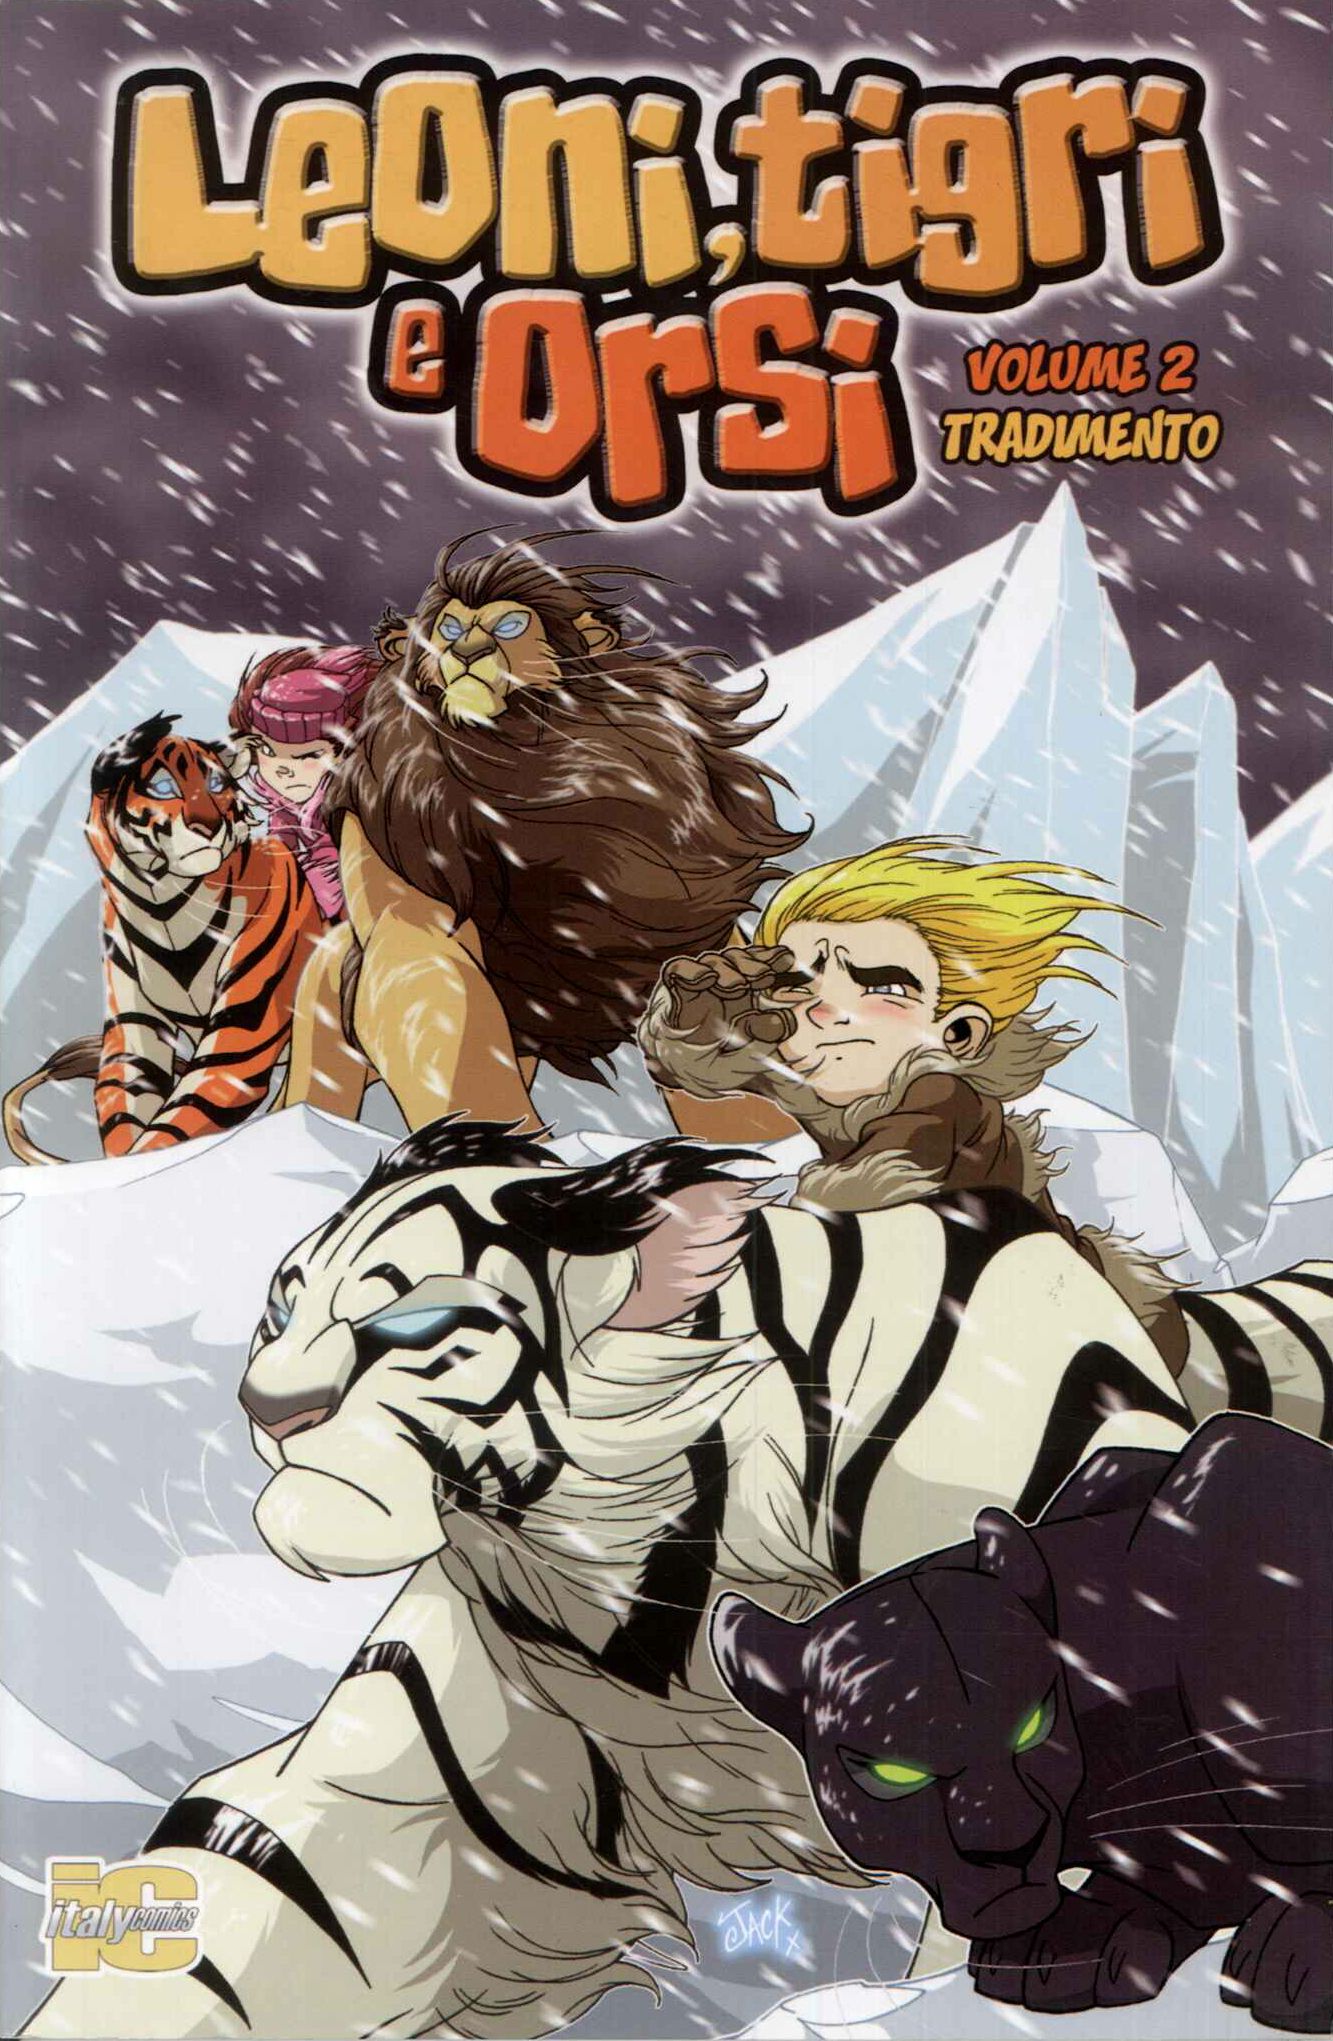 Leoni tigri e orsi. Volume 2